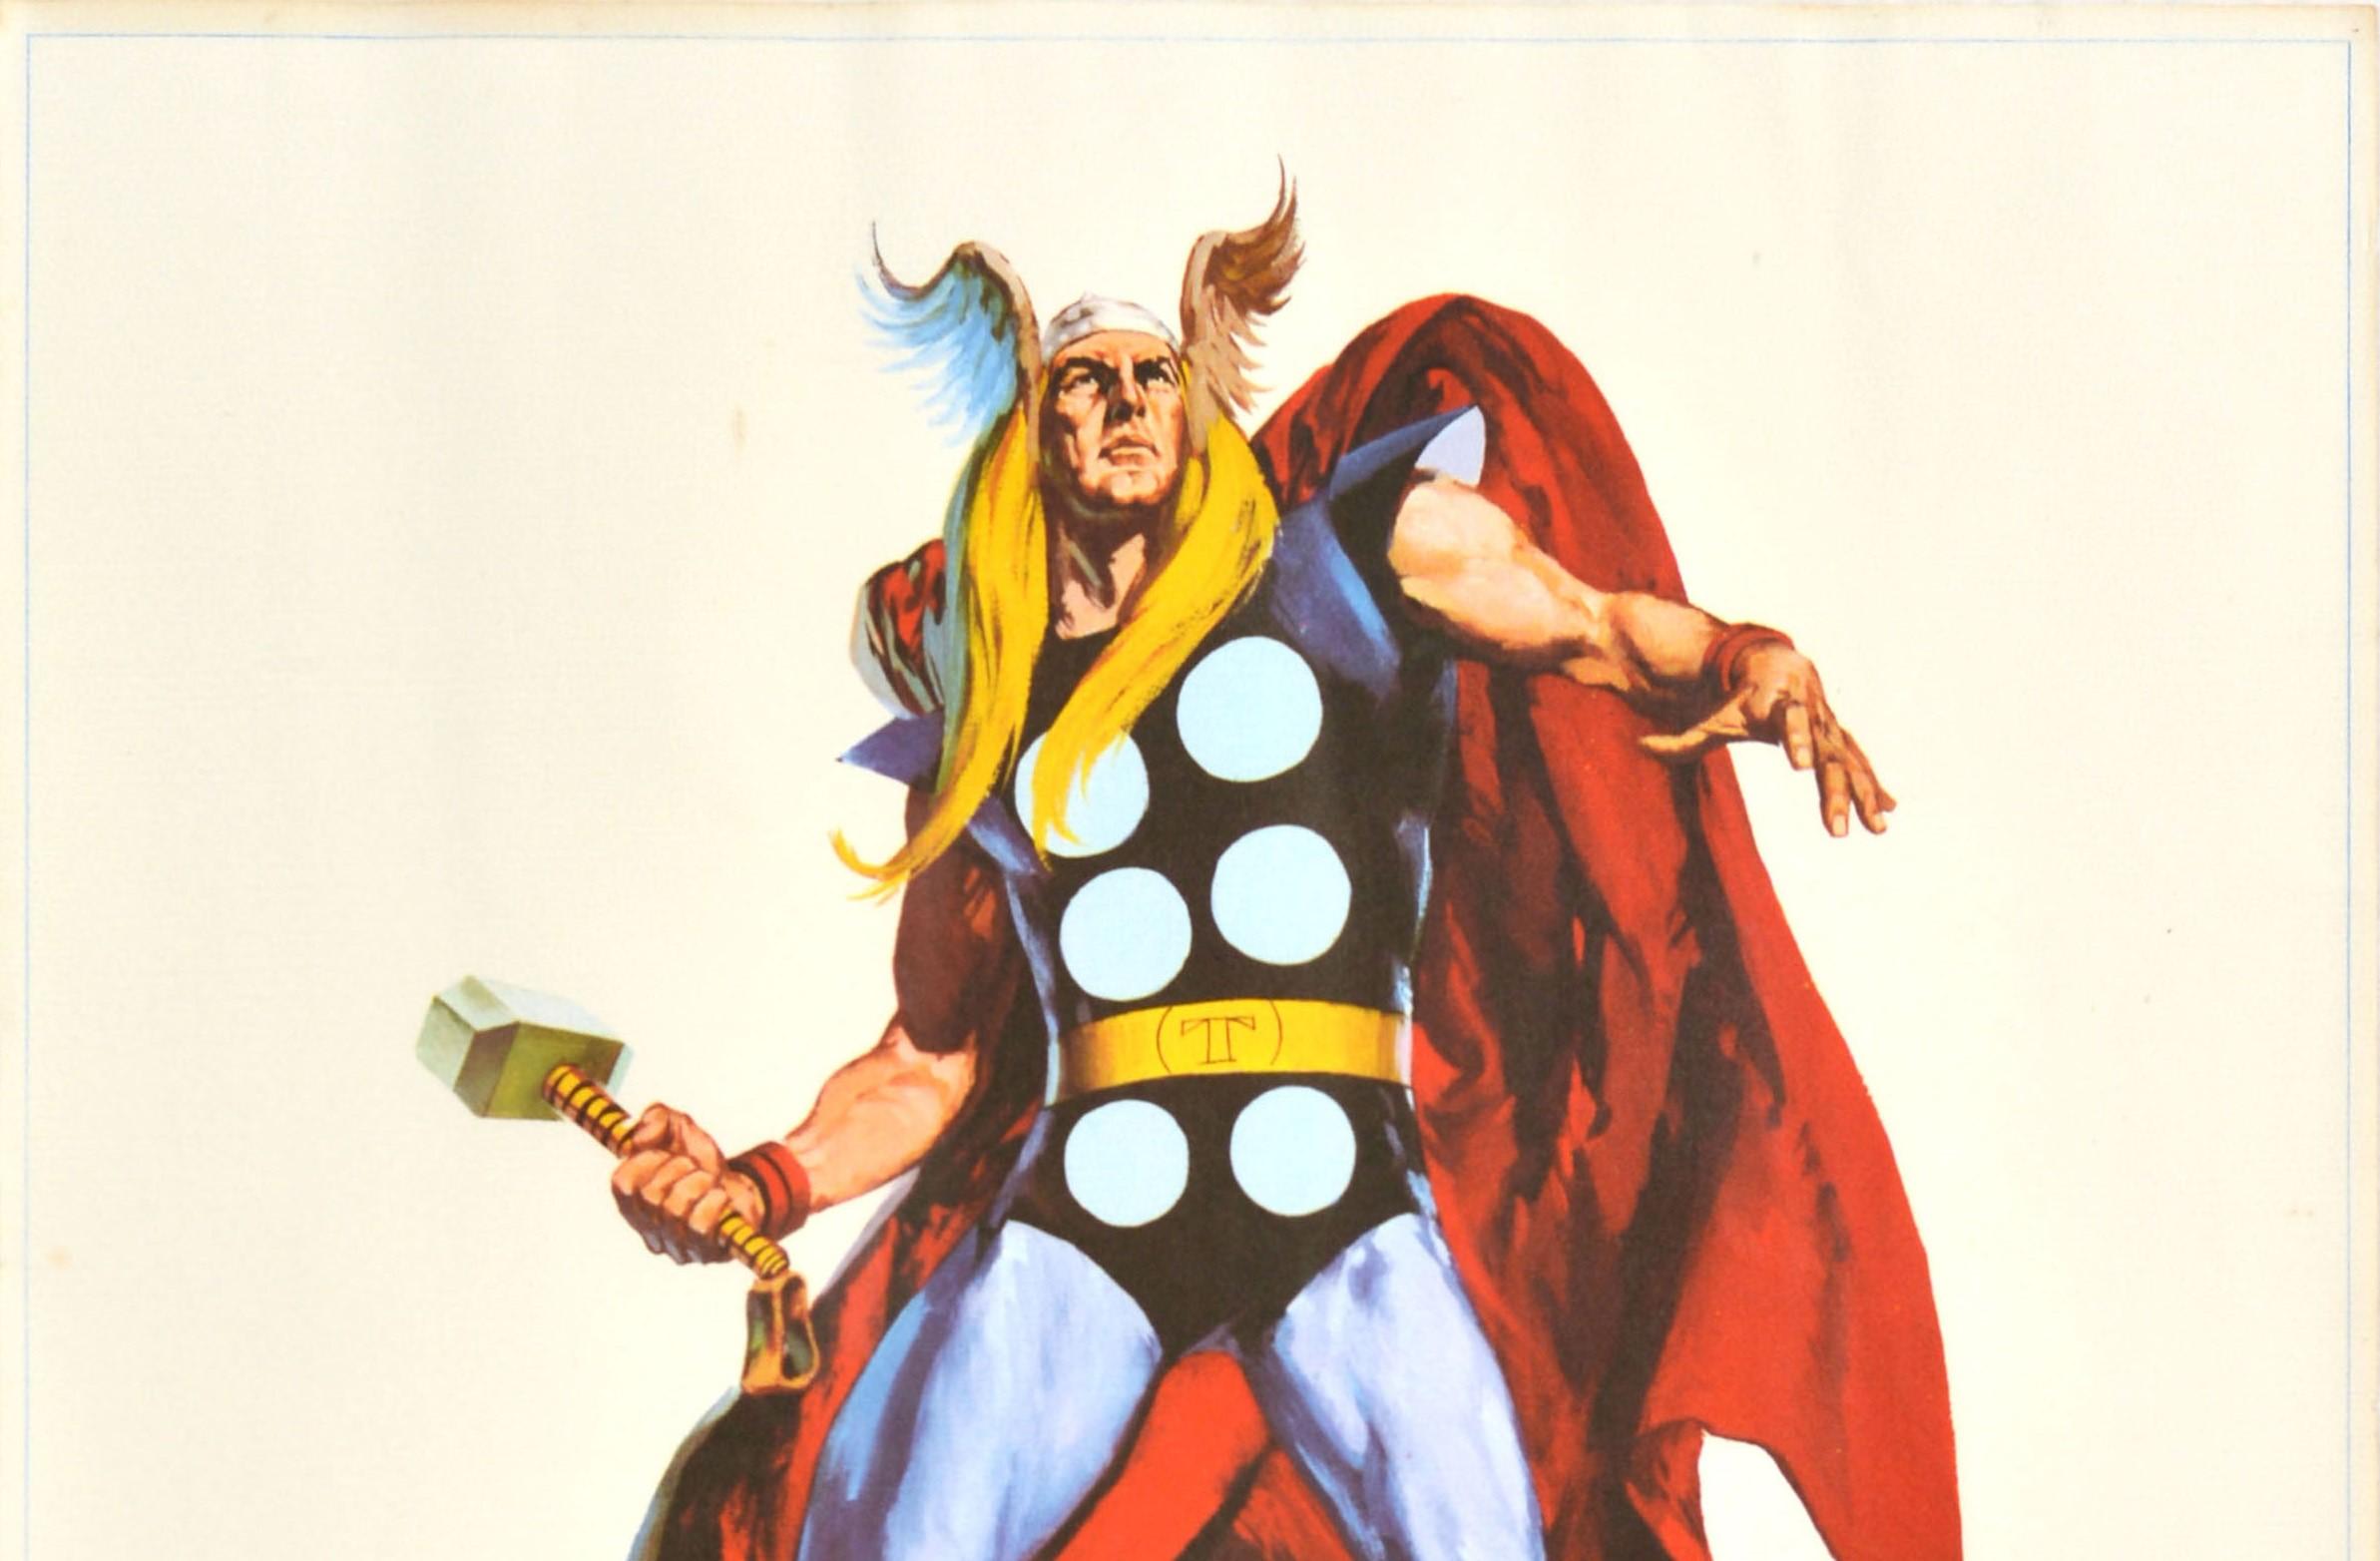 Original Vintage Marvel Film Poster Ft. Thor Animated Comics Superhero Movie Art - Print by Lopez Espi